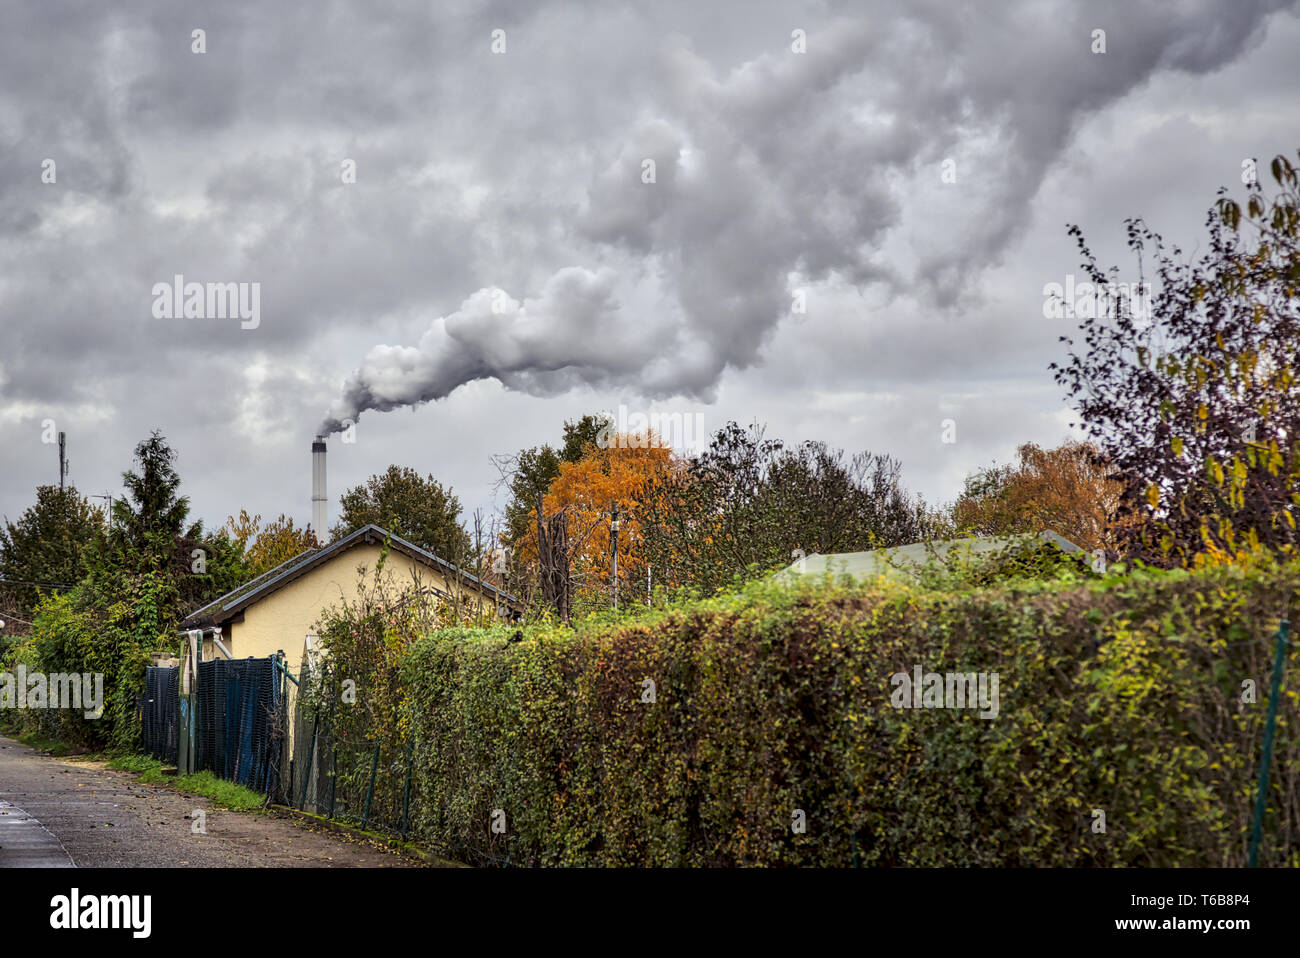 smoking chimney behind garden plots in Berlin Stock Photo